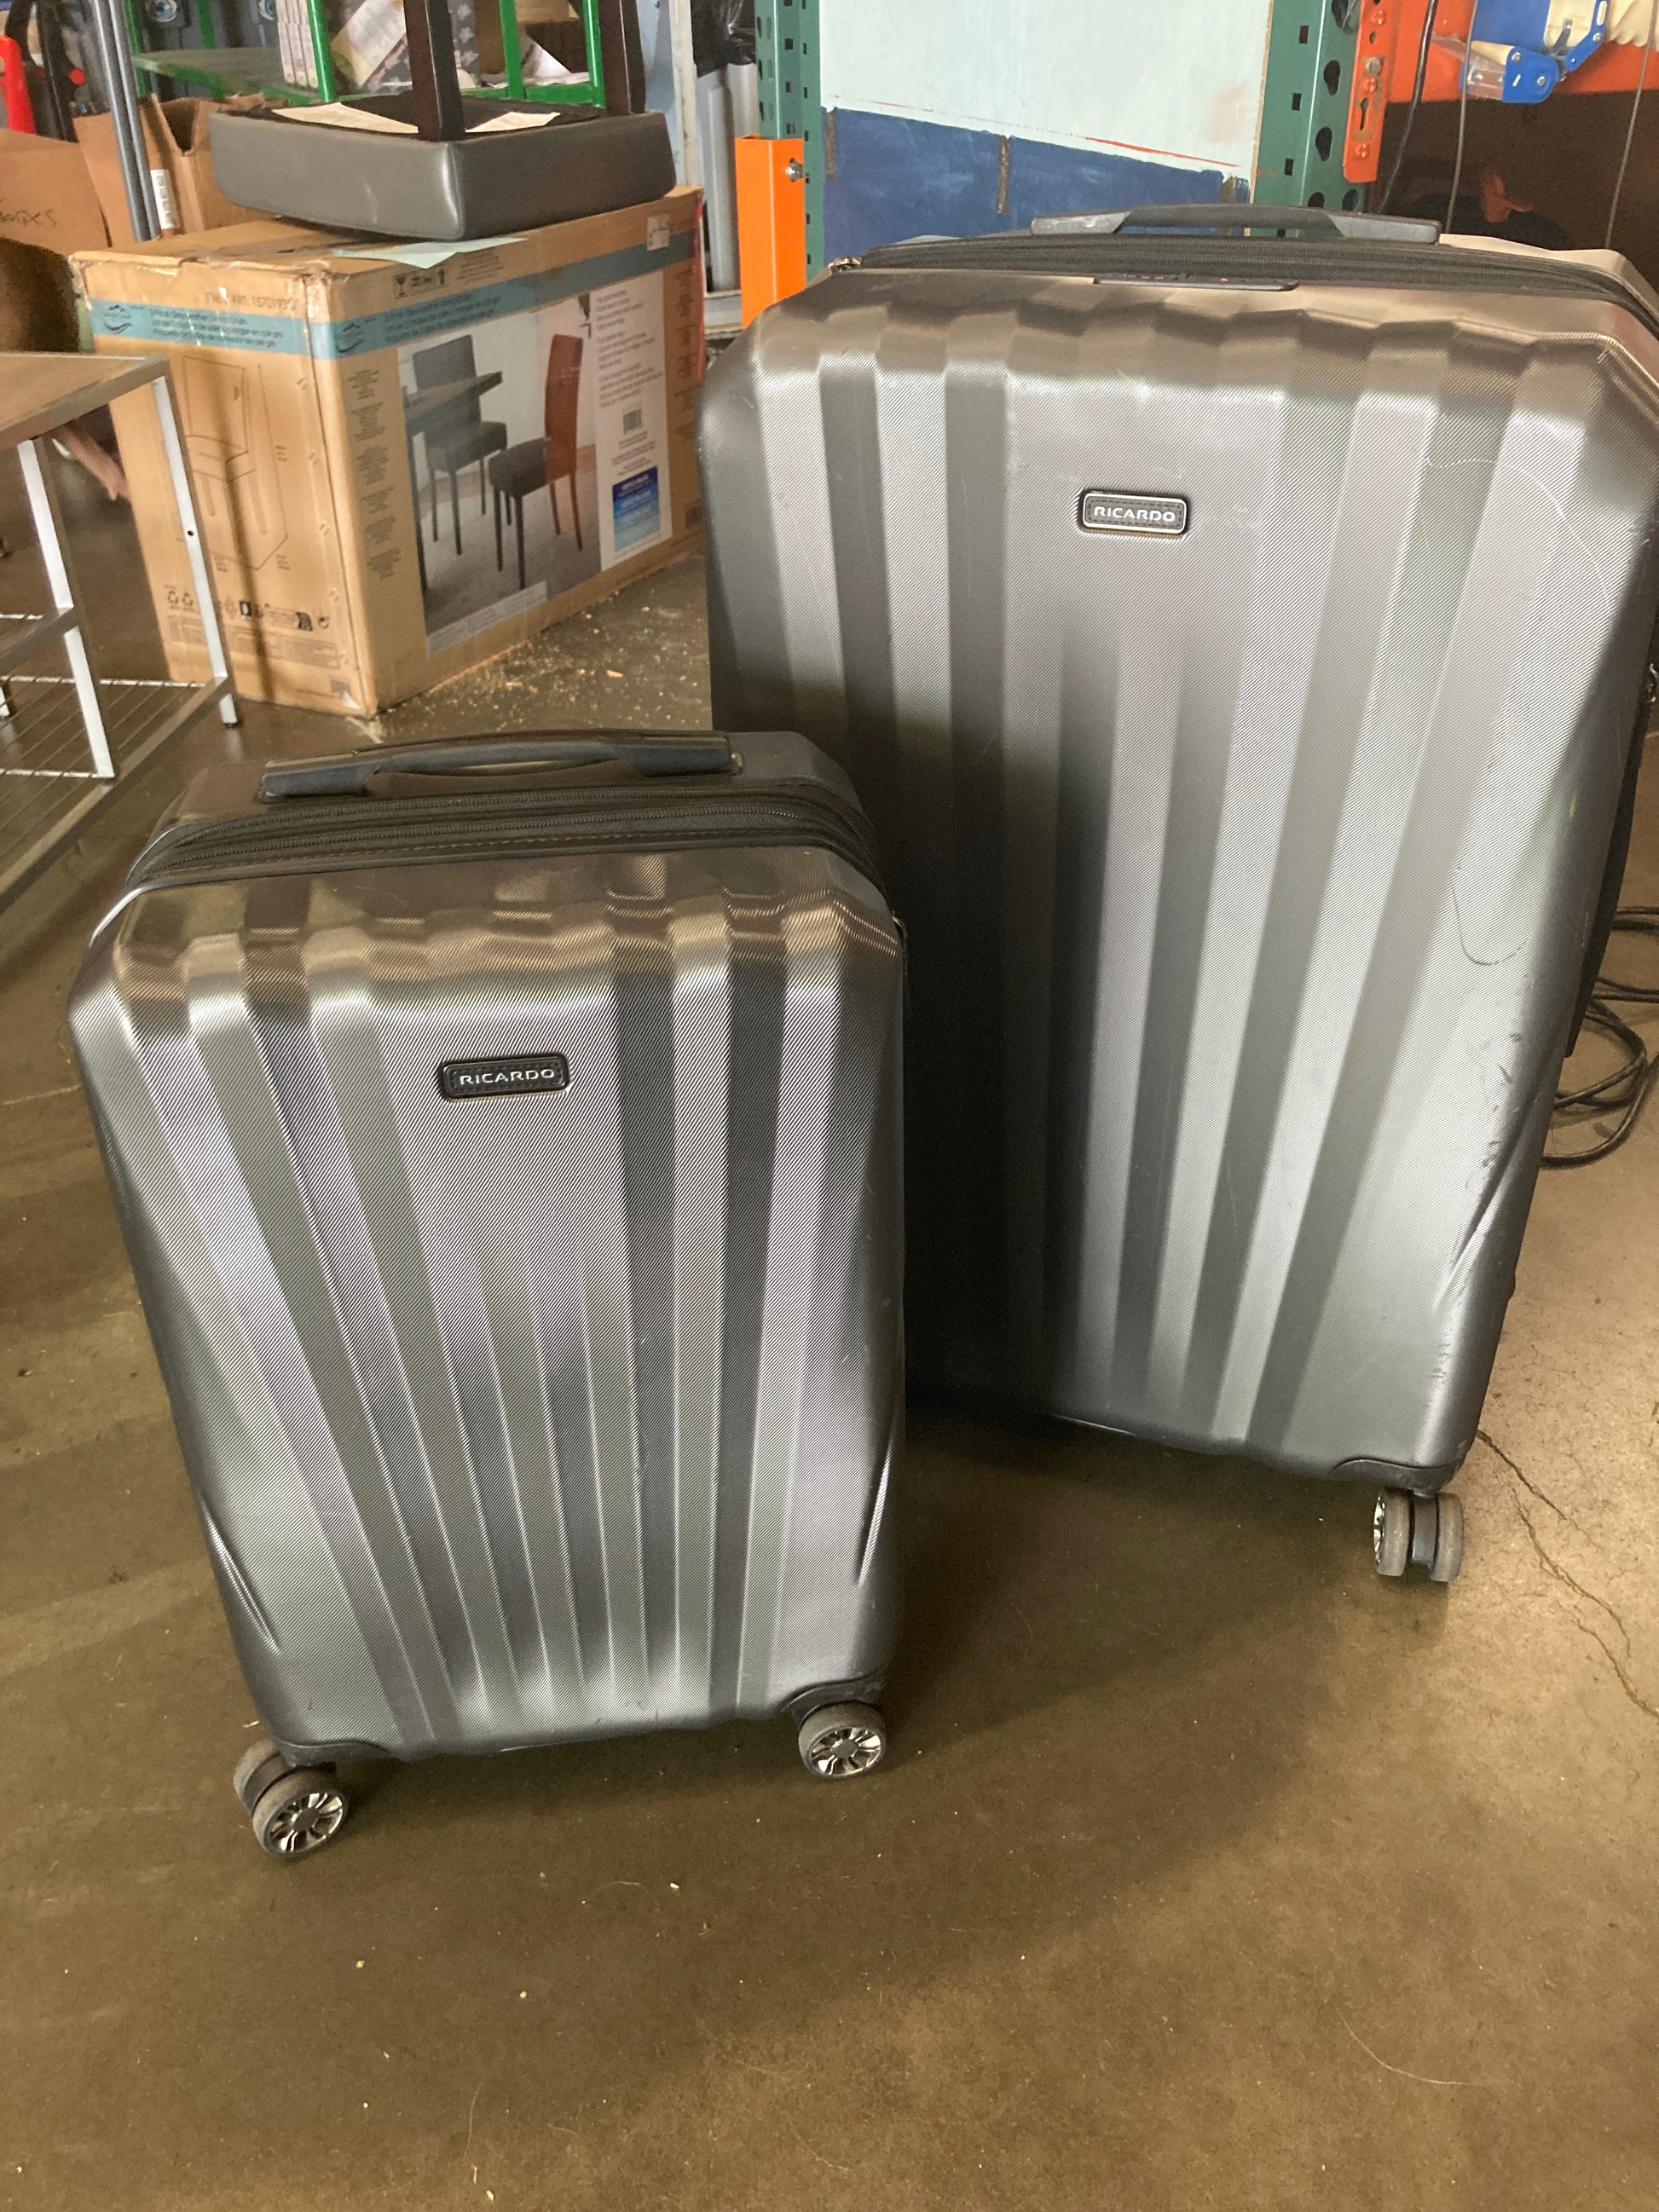 Costco - Ricardo Beverly Hills Windsor 2 Piece Luggage Set Graphite - Retail $179 Default Title